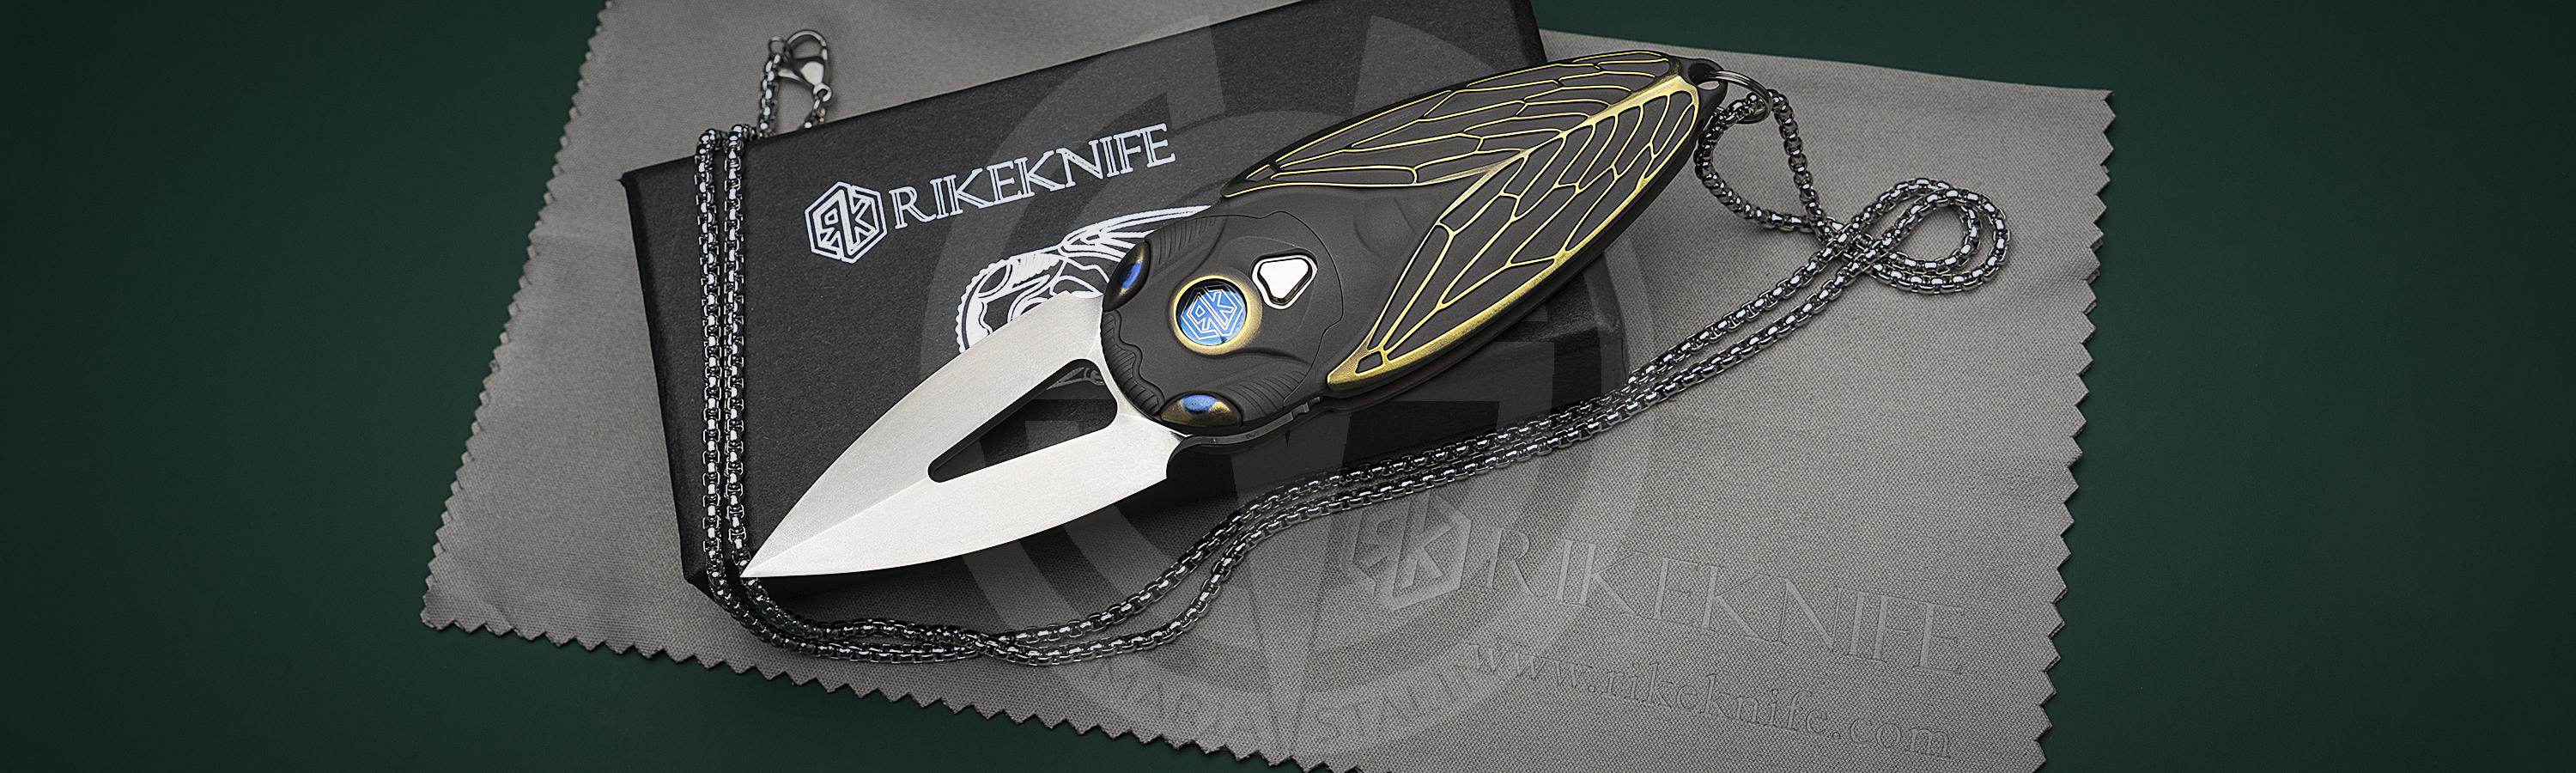 Chinese-made knife Rike Knife